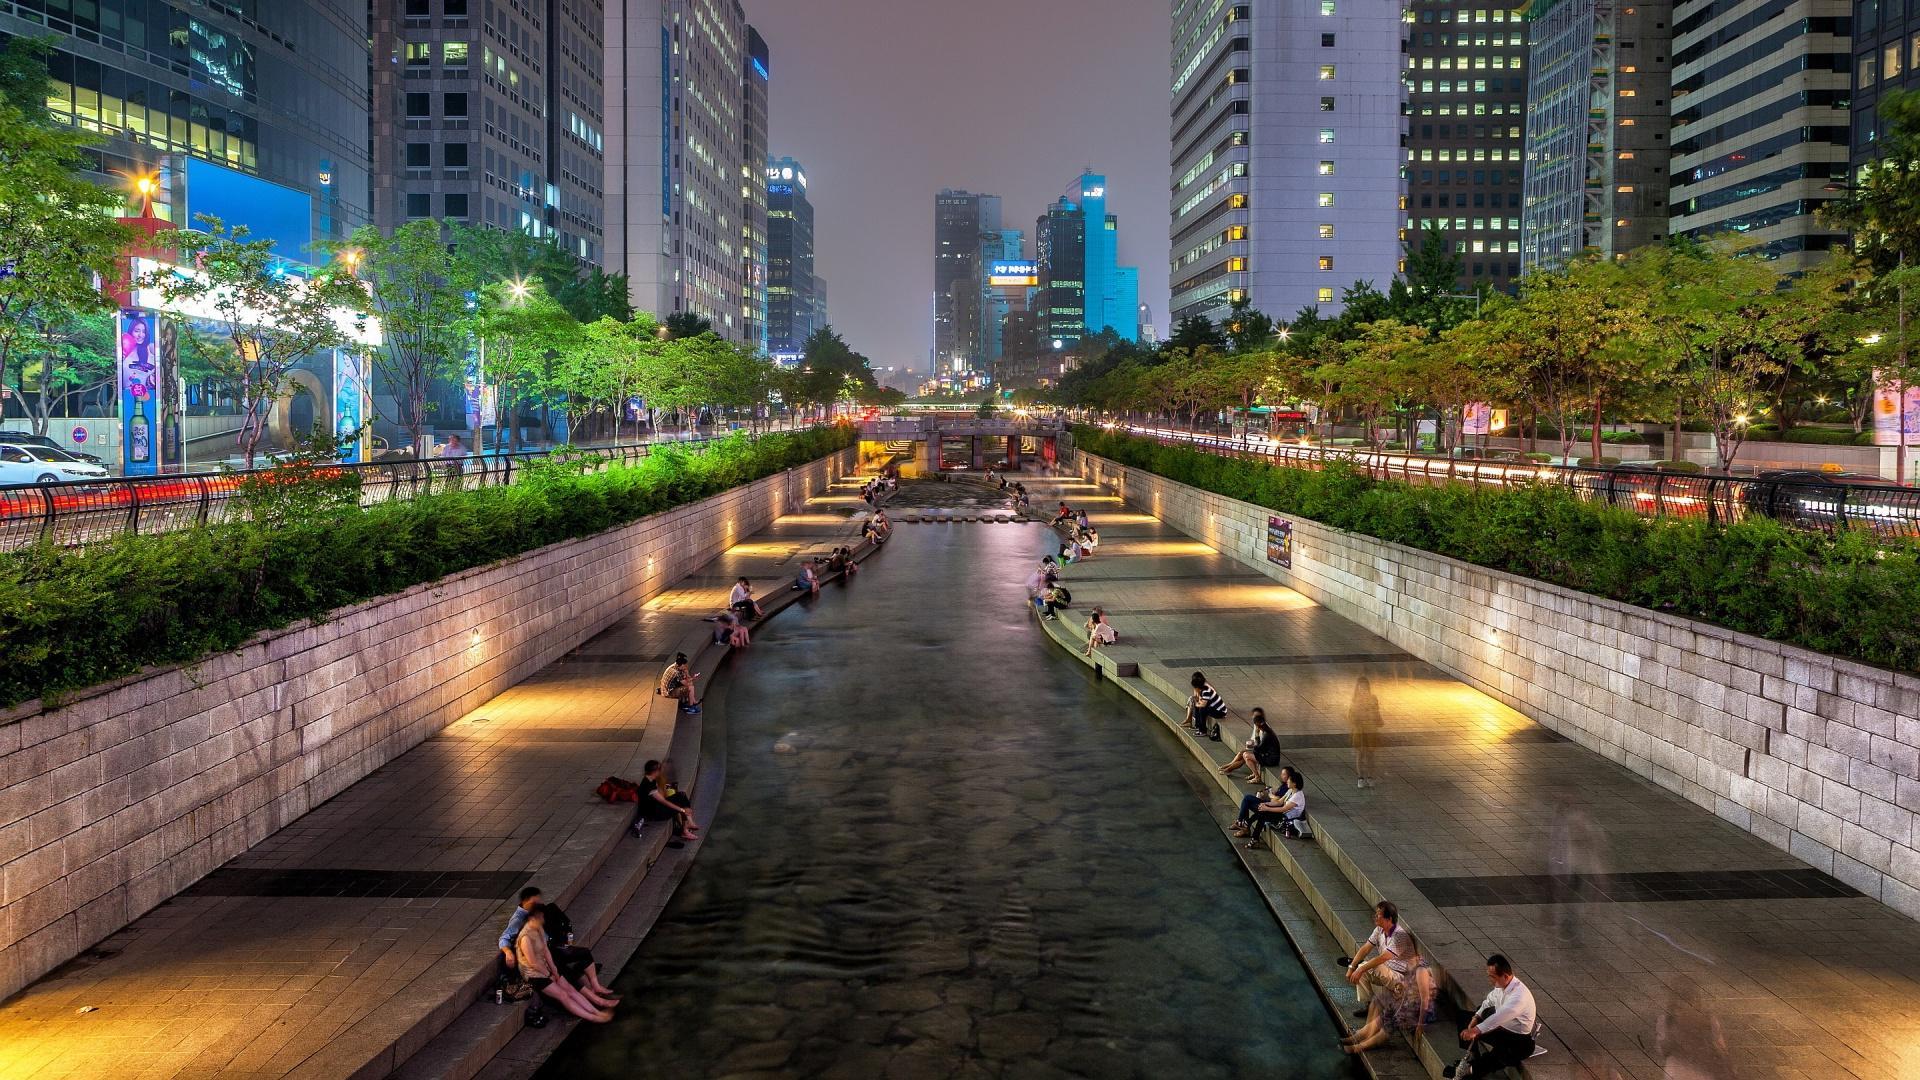 Wonderful, City, Canal, In, Seoul, South, Korea, Hd, Wallpaper